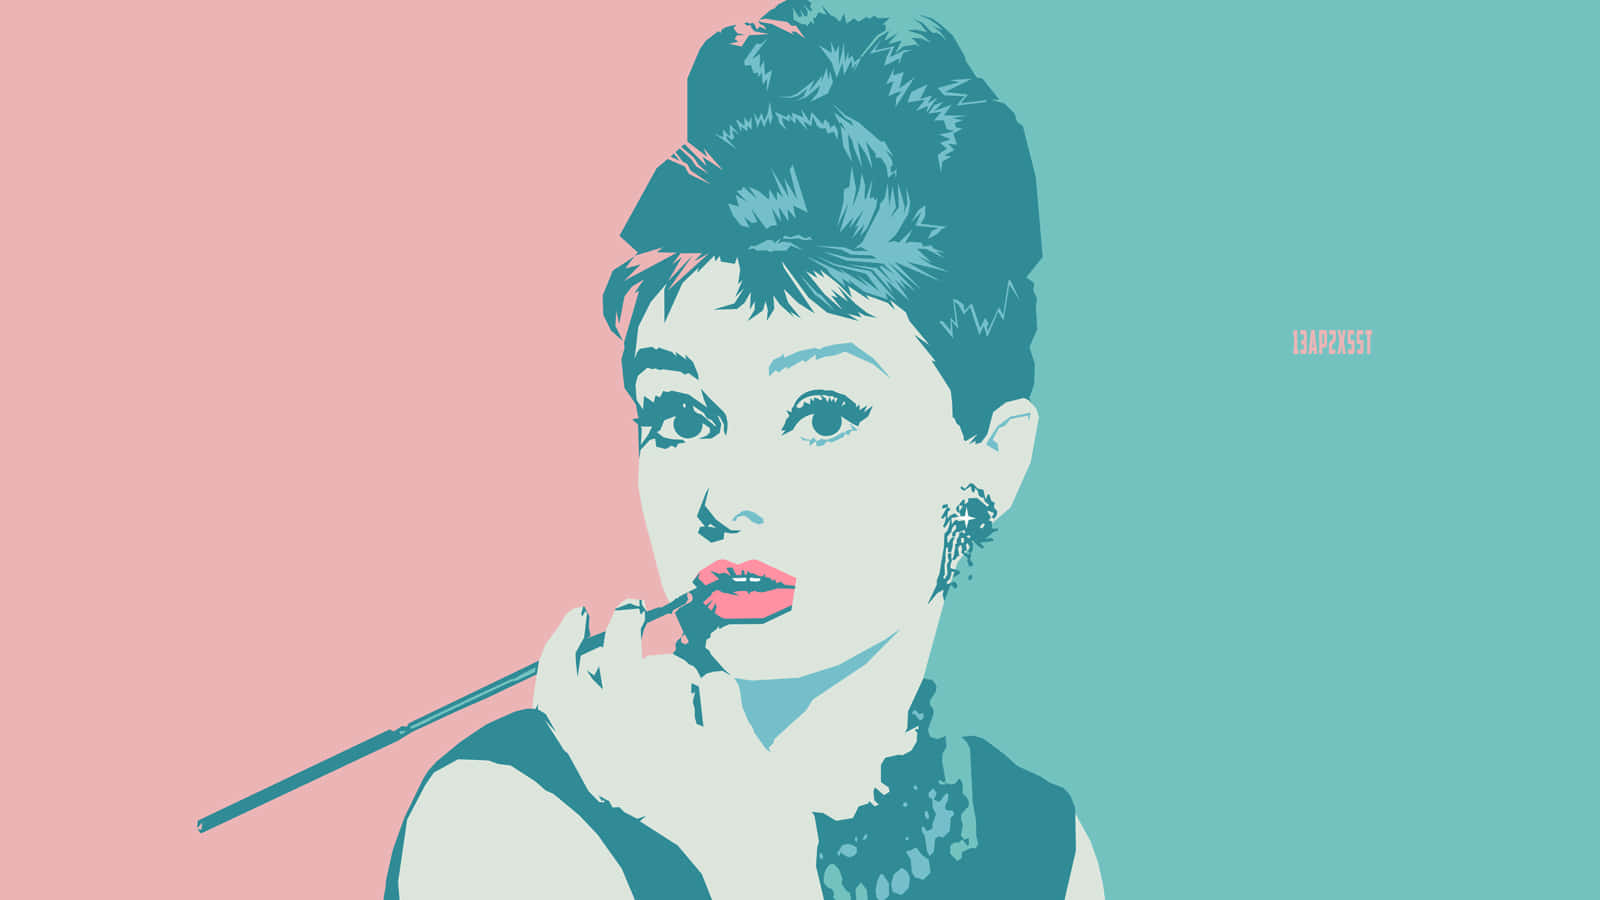 "Audrey Hepburn, movie legend and iconic style icon."